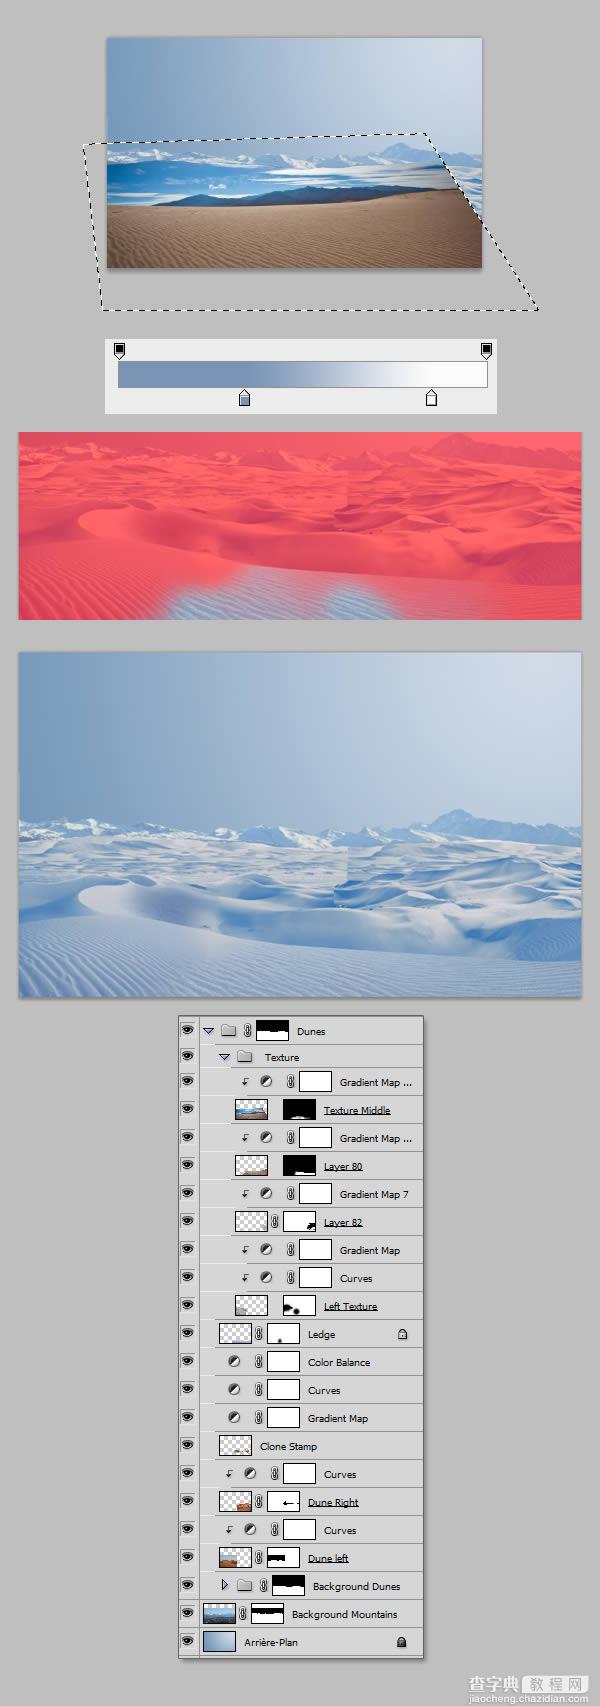 photoshop将荒漠场景打造出迪士尼风格的雪景图27